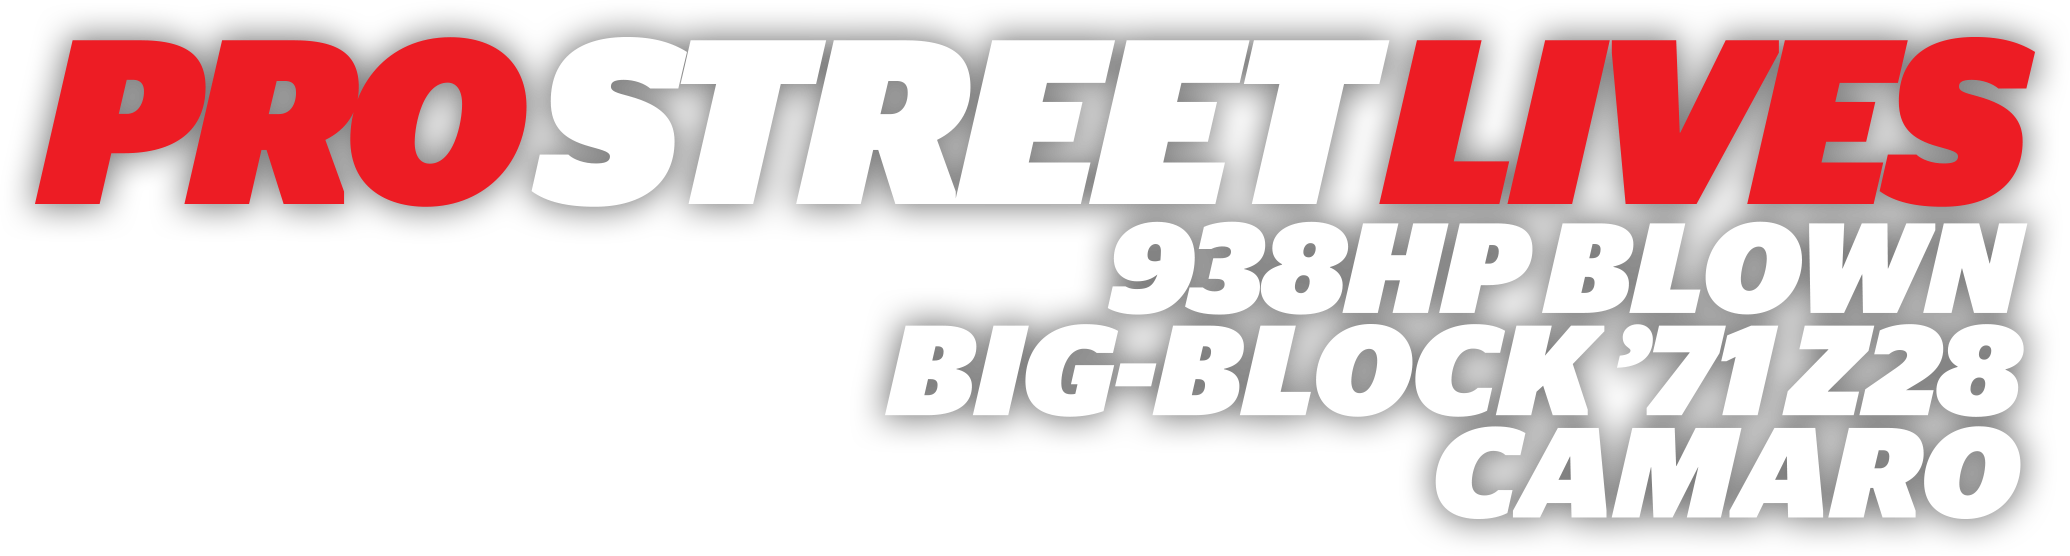 Pro Street Lives: 938hp Blown Big-block '71 Z28 Camaro